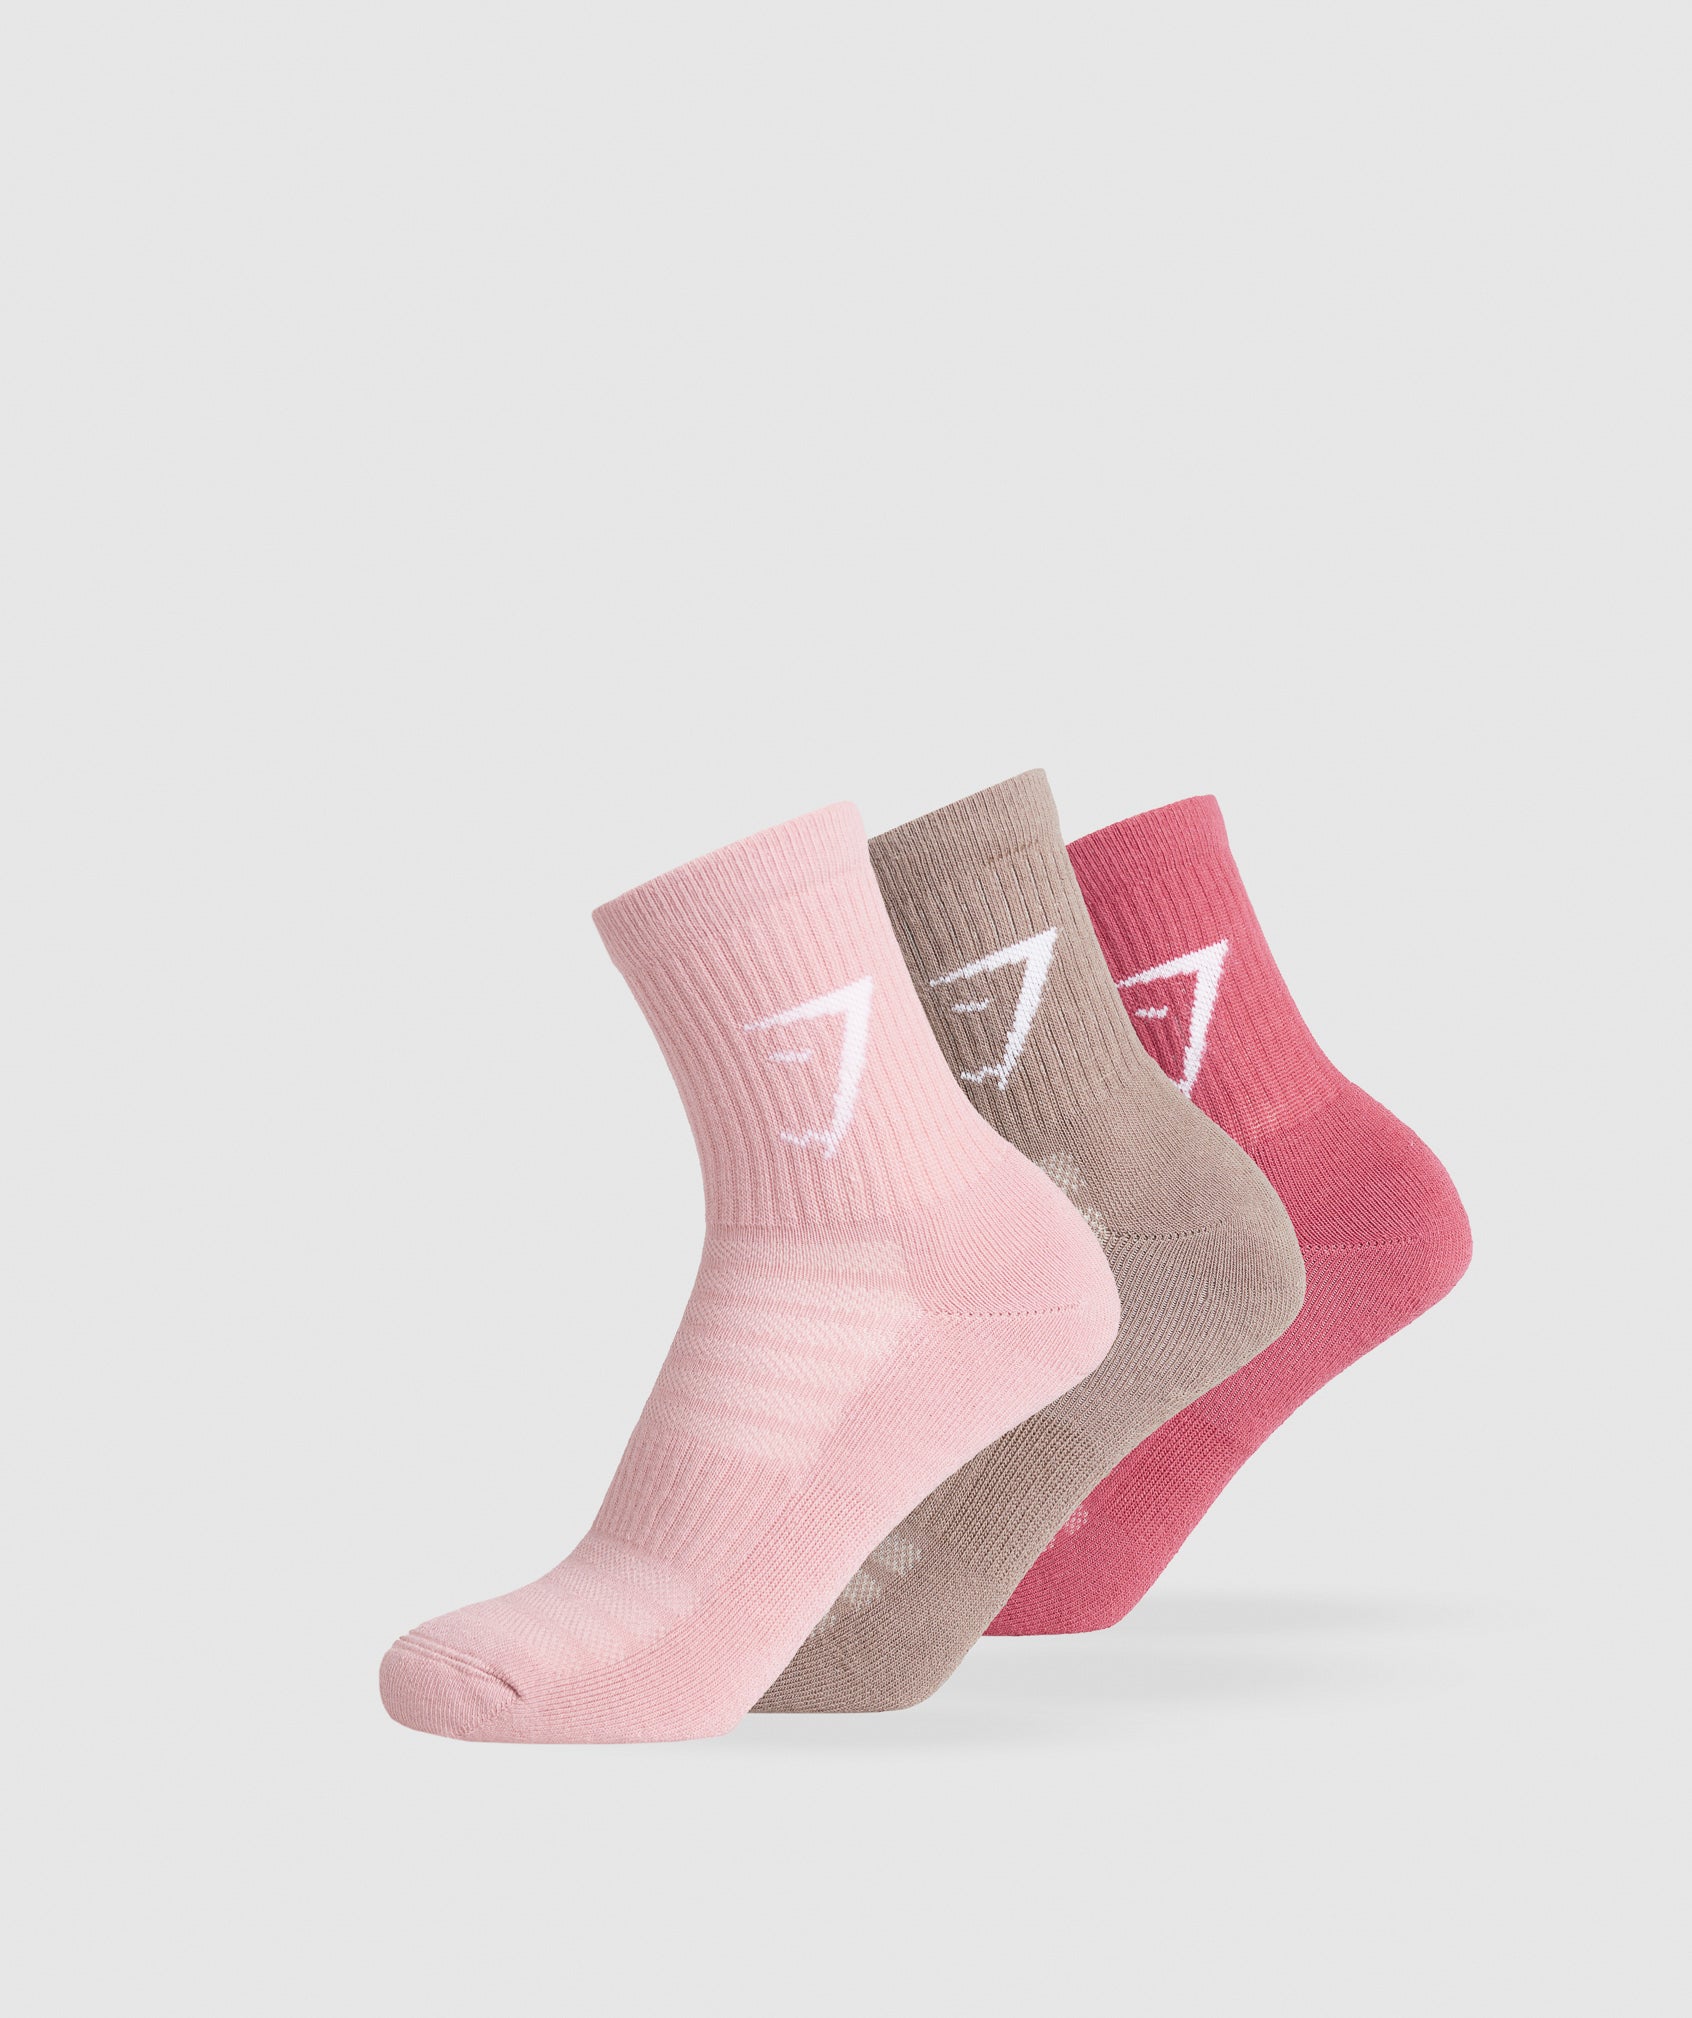 Midi 3pk Socks in Vintage Pink/Light Pink/Mocha Mauve